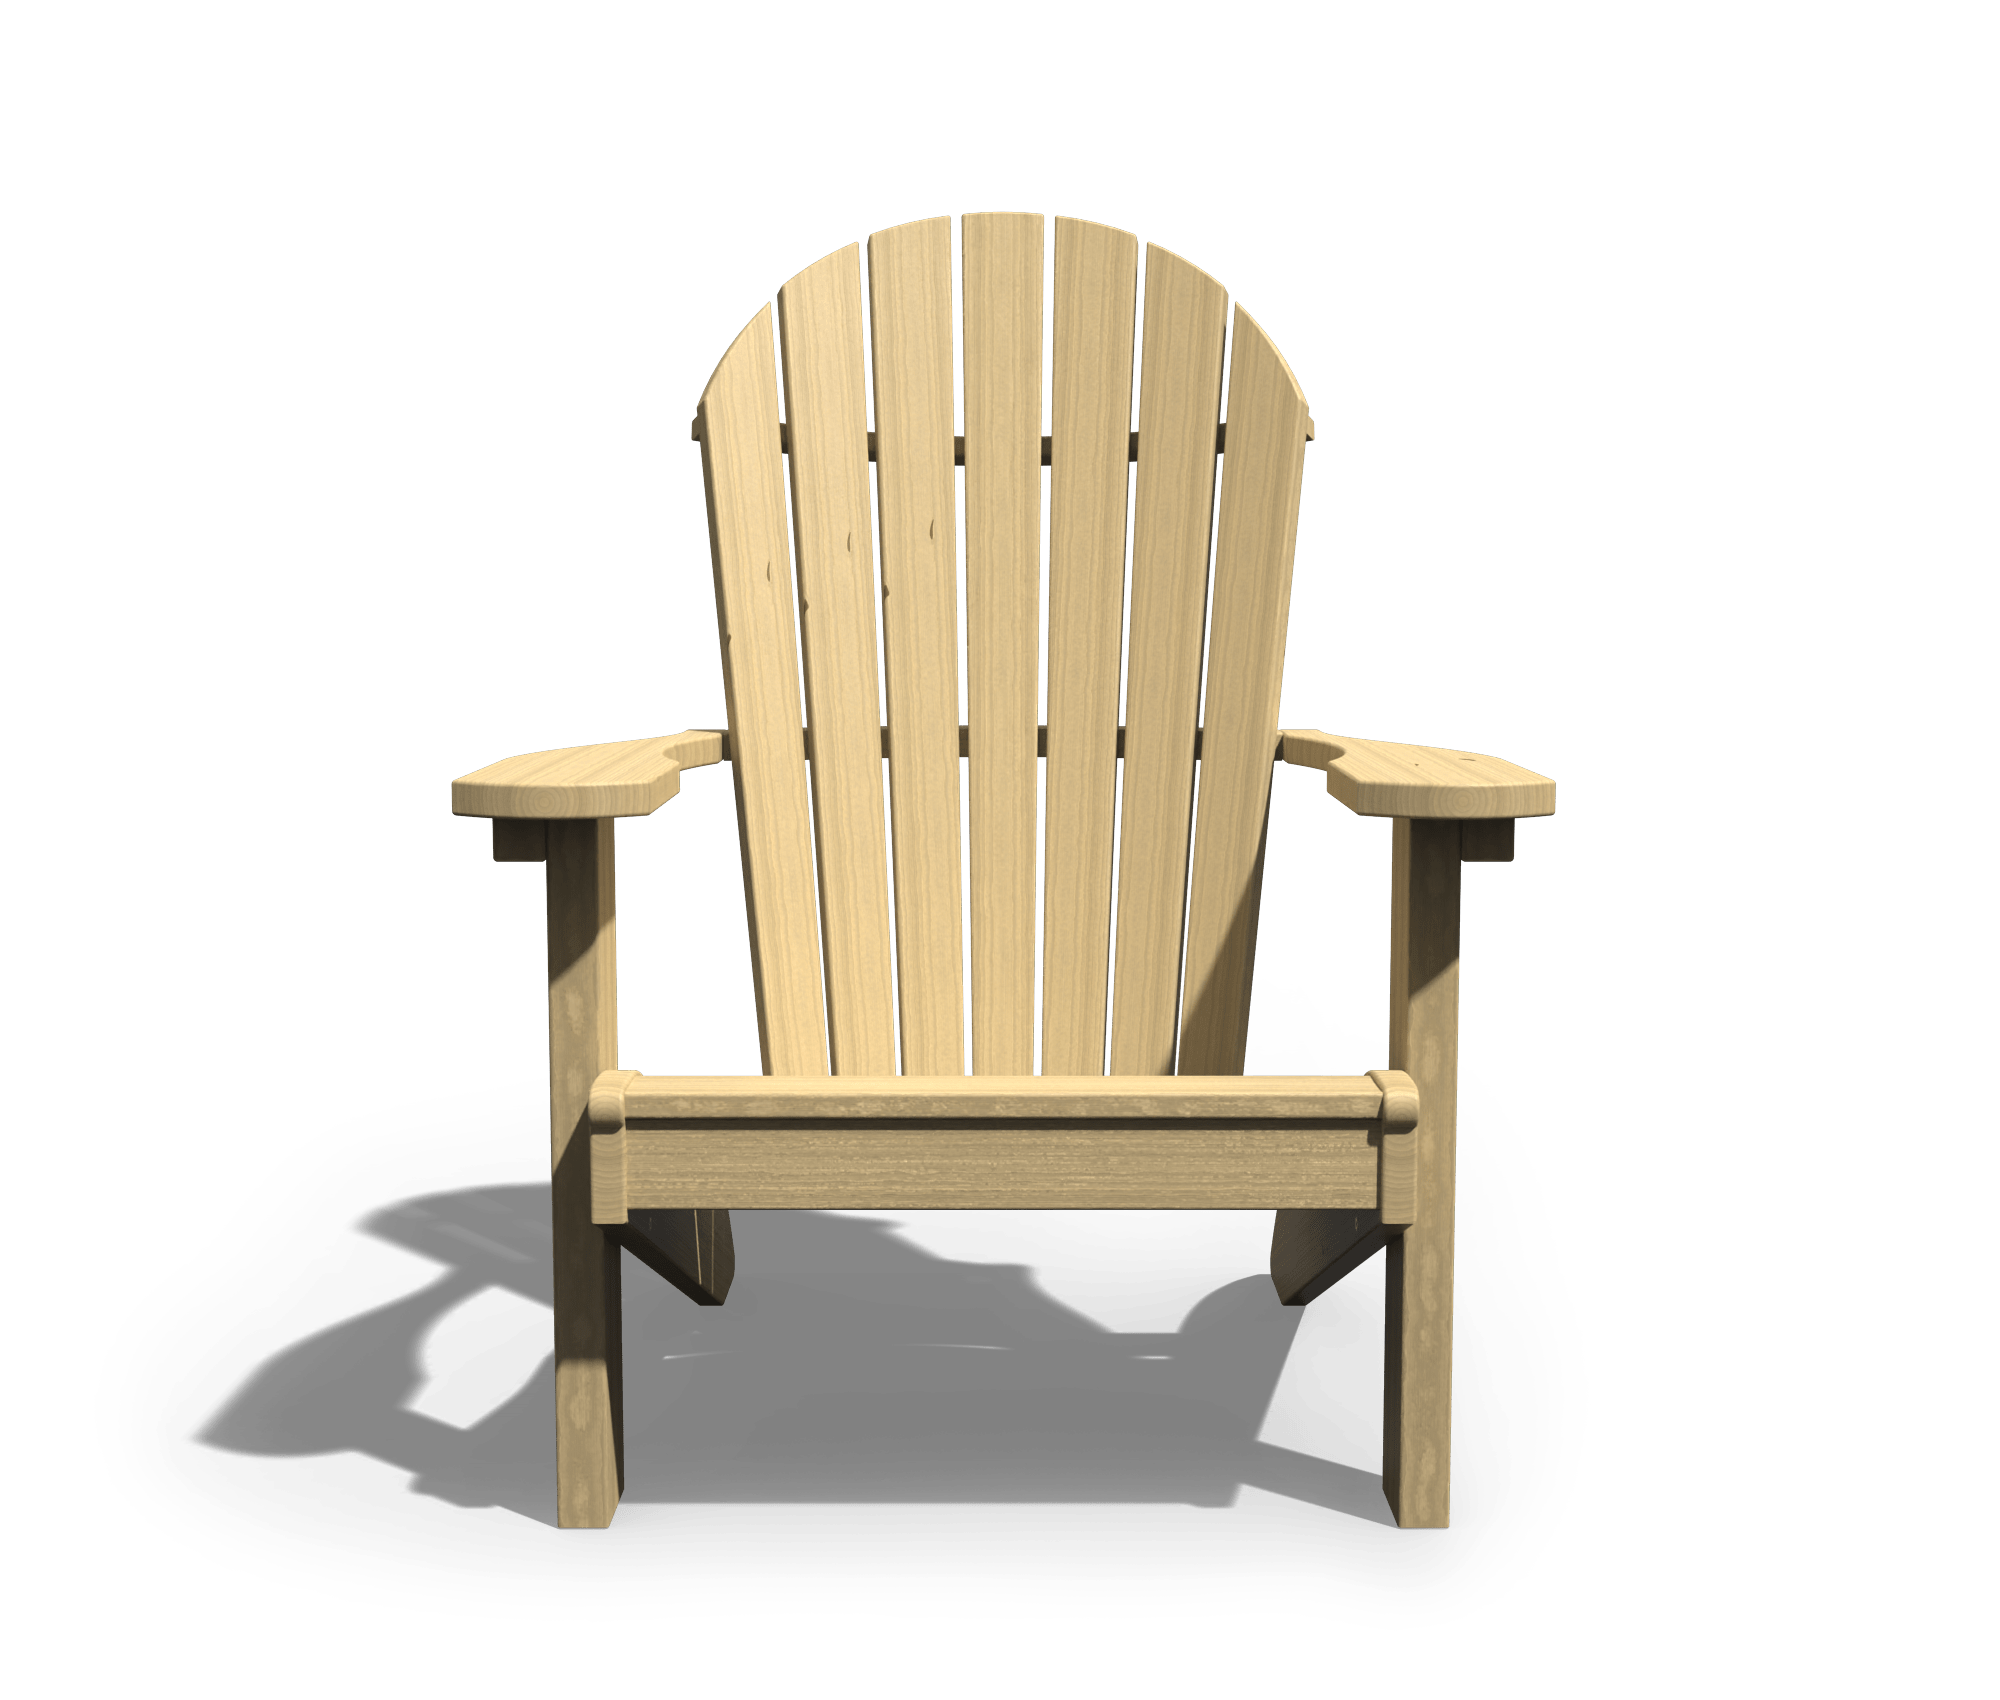 Details about   Adirondack Chair Solid Wood Ergonomic Seat Durable Outdoor Garden Deck Furniture 